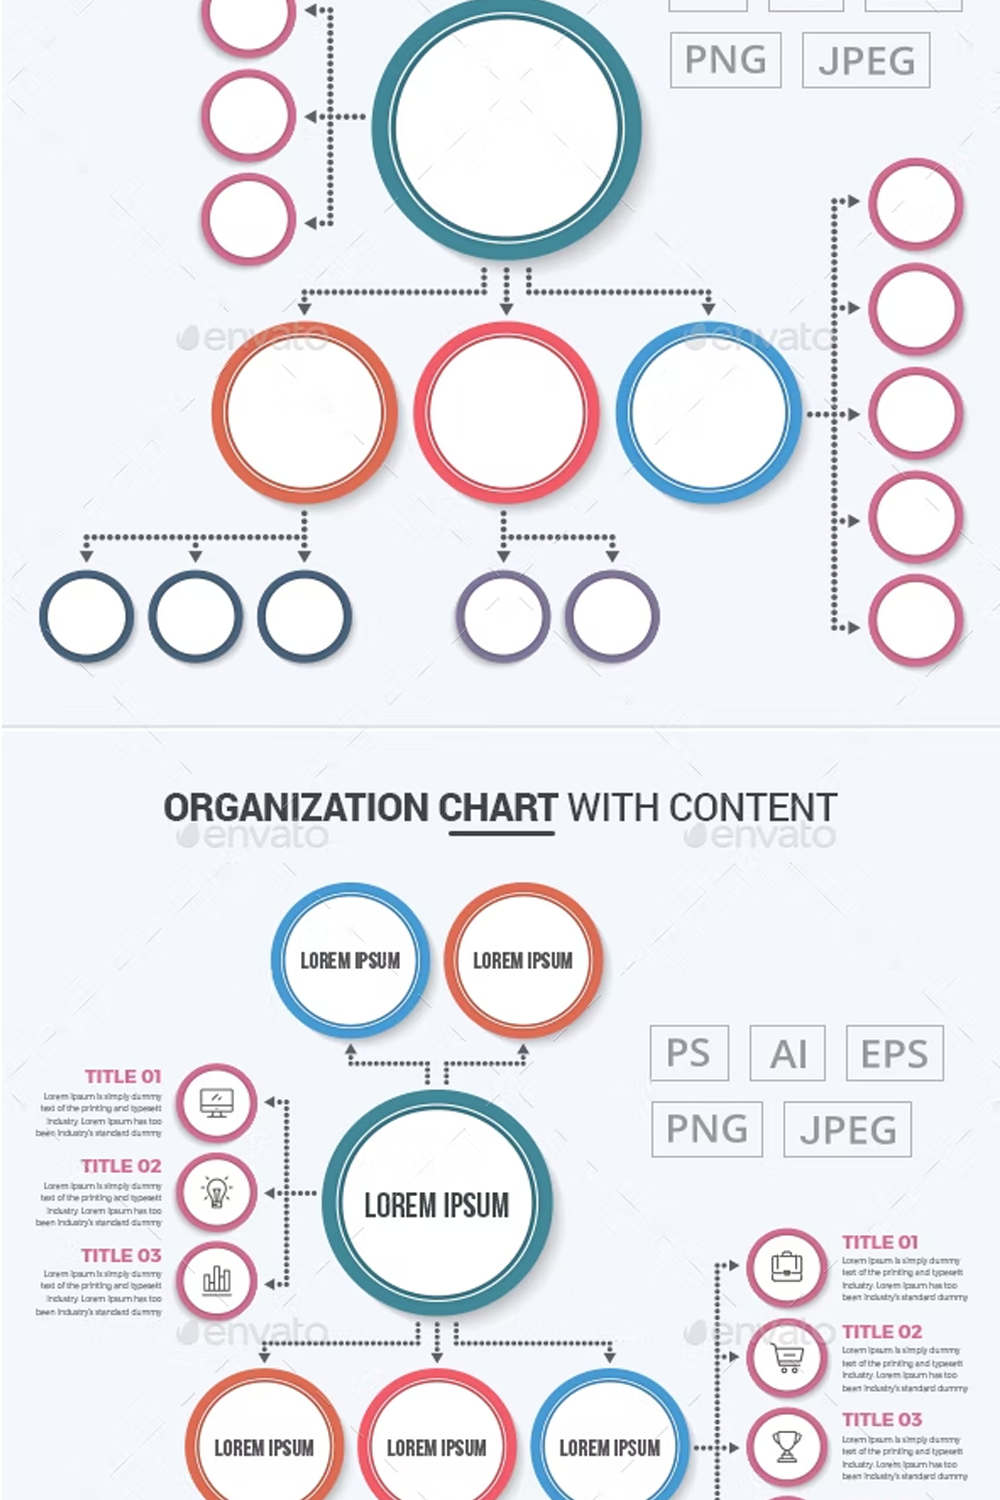 Illustrations organization chart of pinterest.